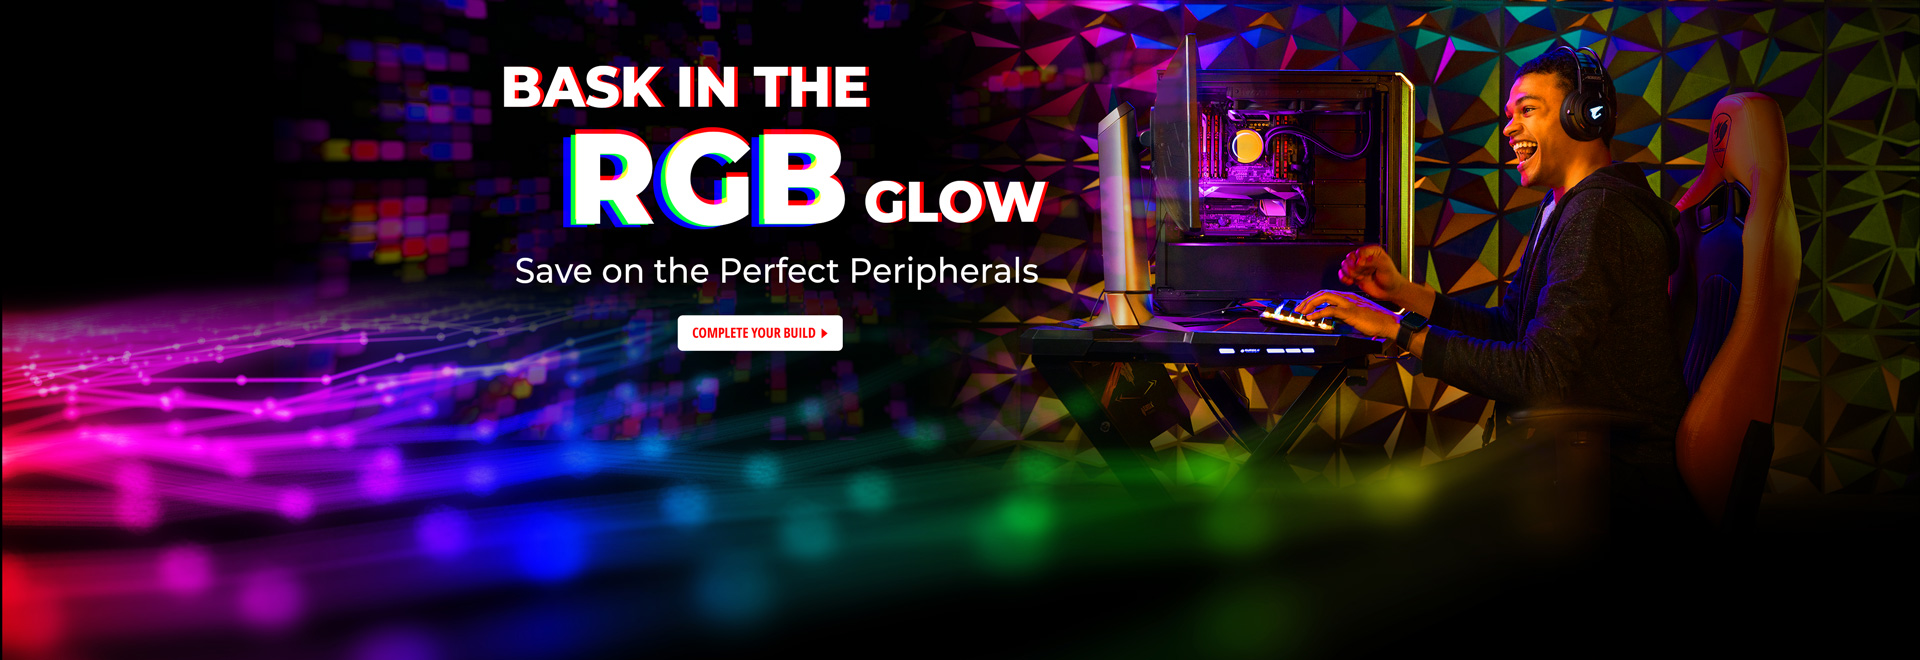 Bask in the RGB Glow